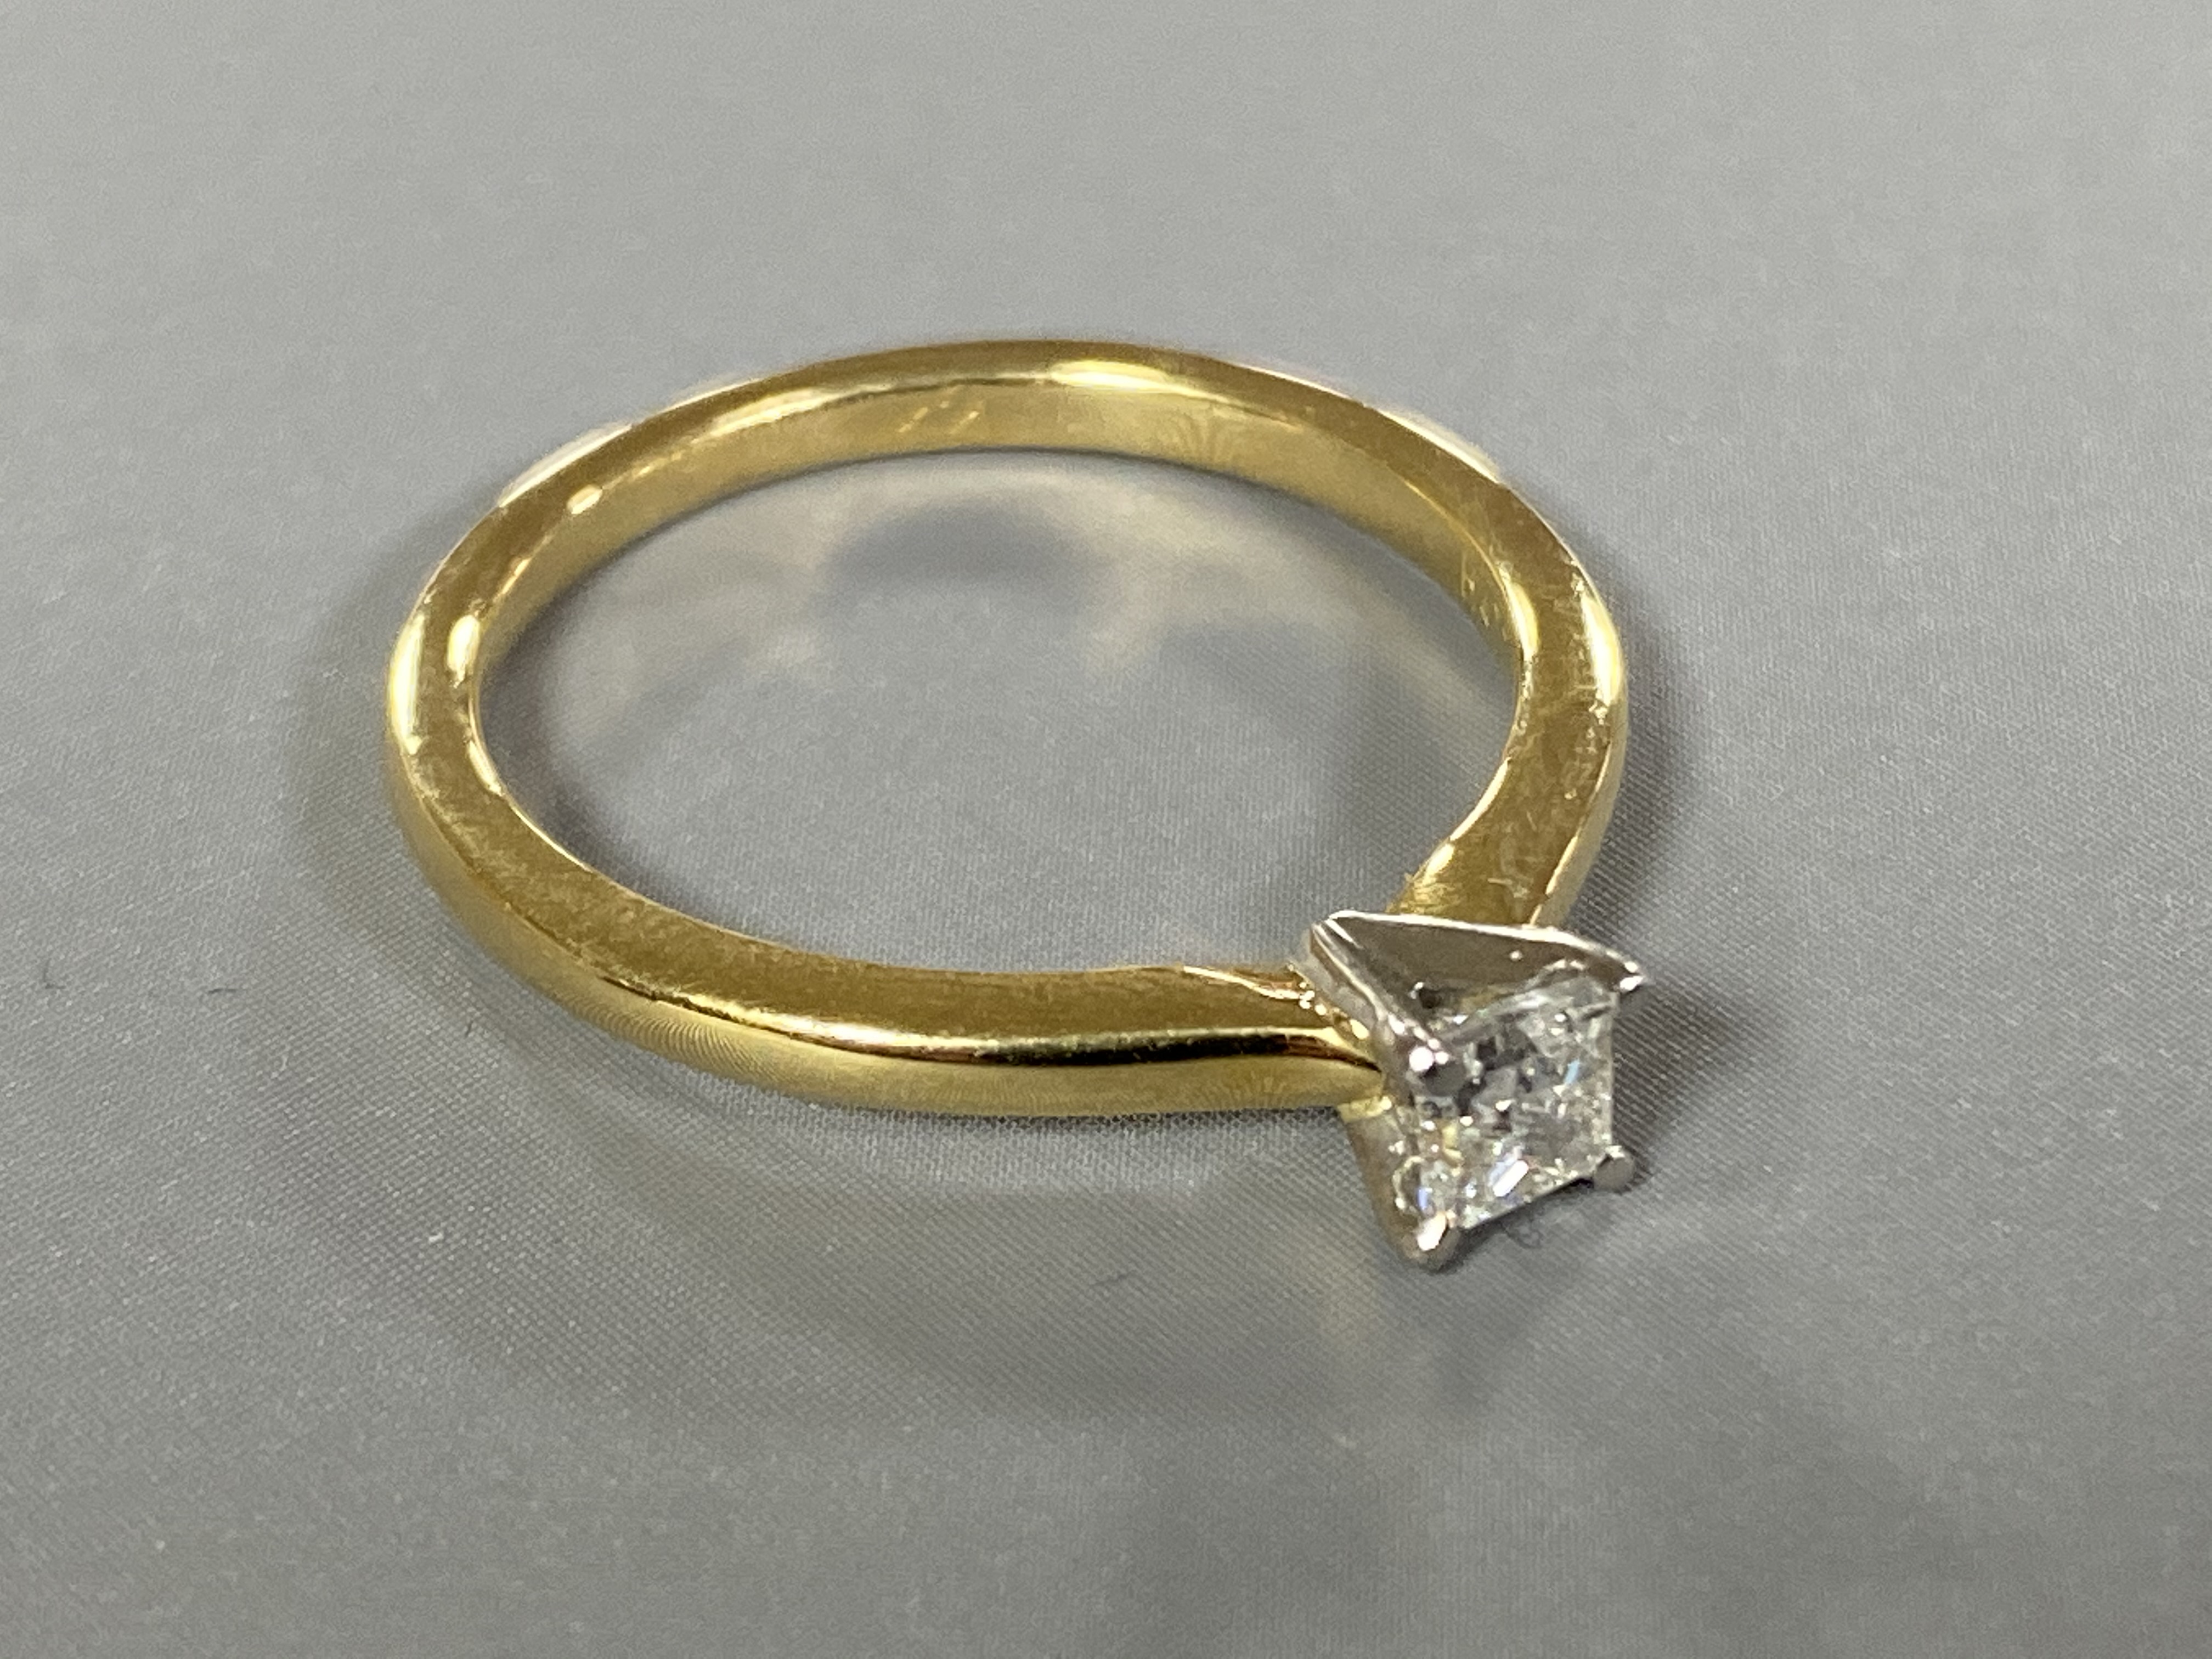 An 18ct yellow gold princess cut diamond ring, approximately 0.